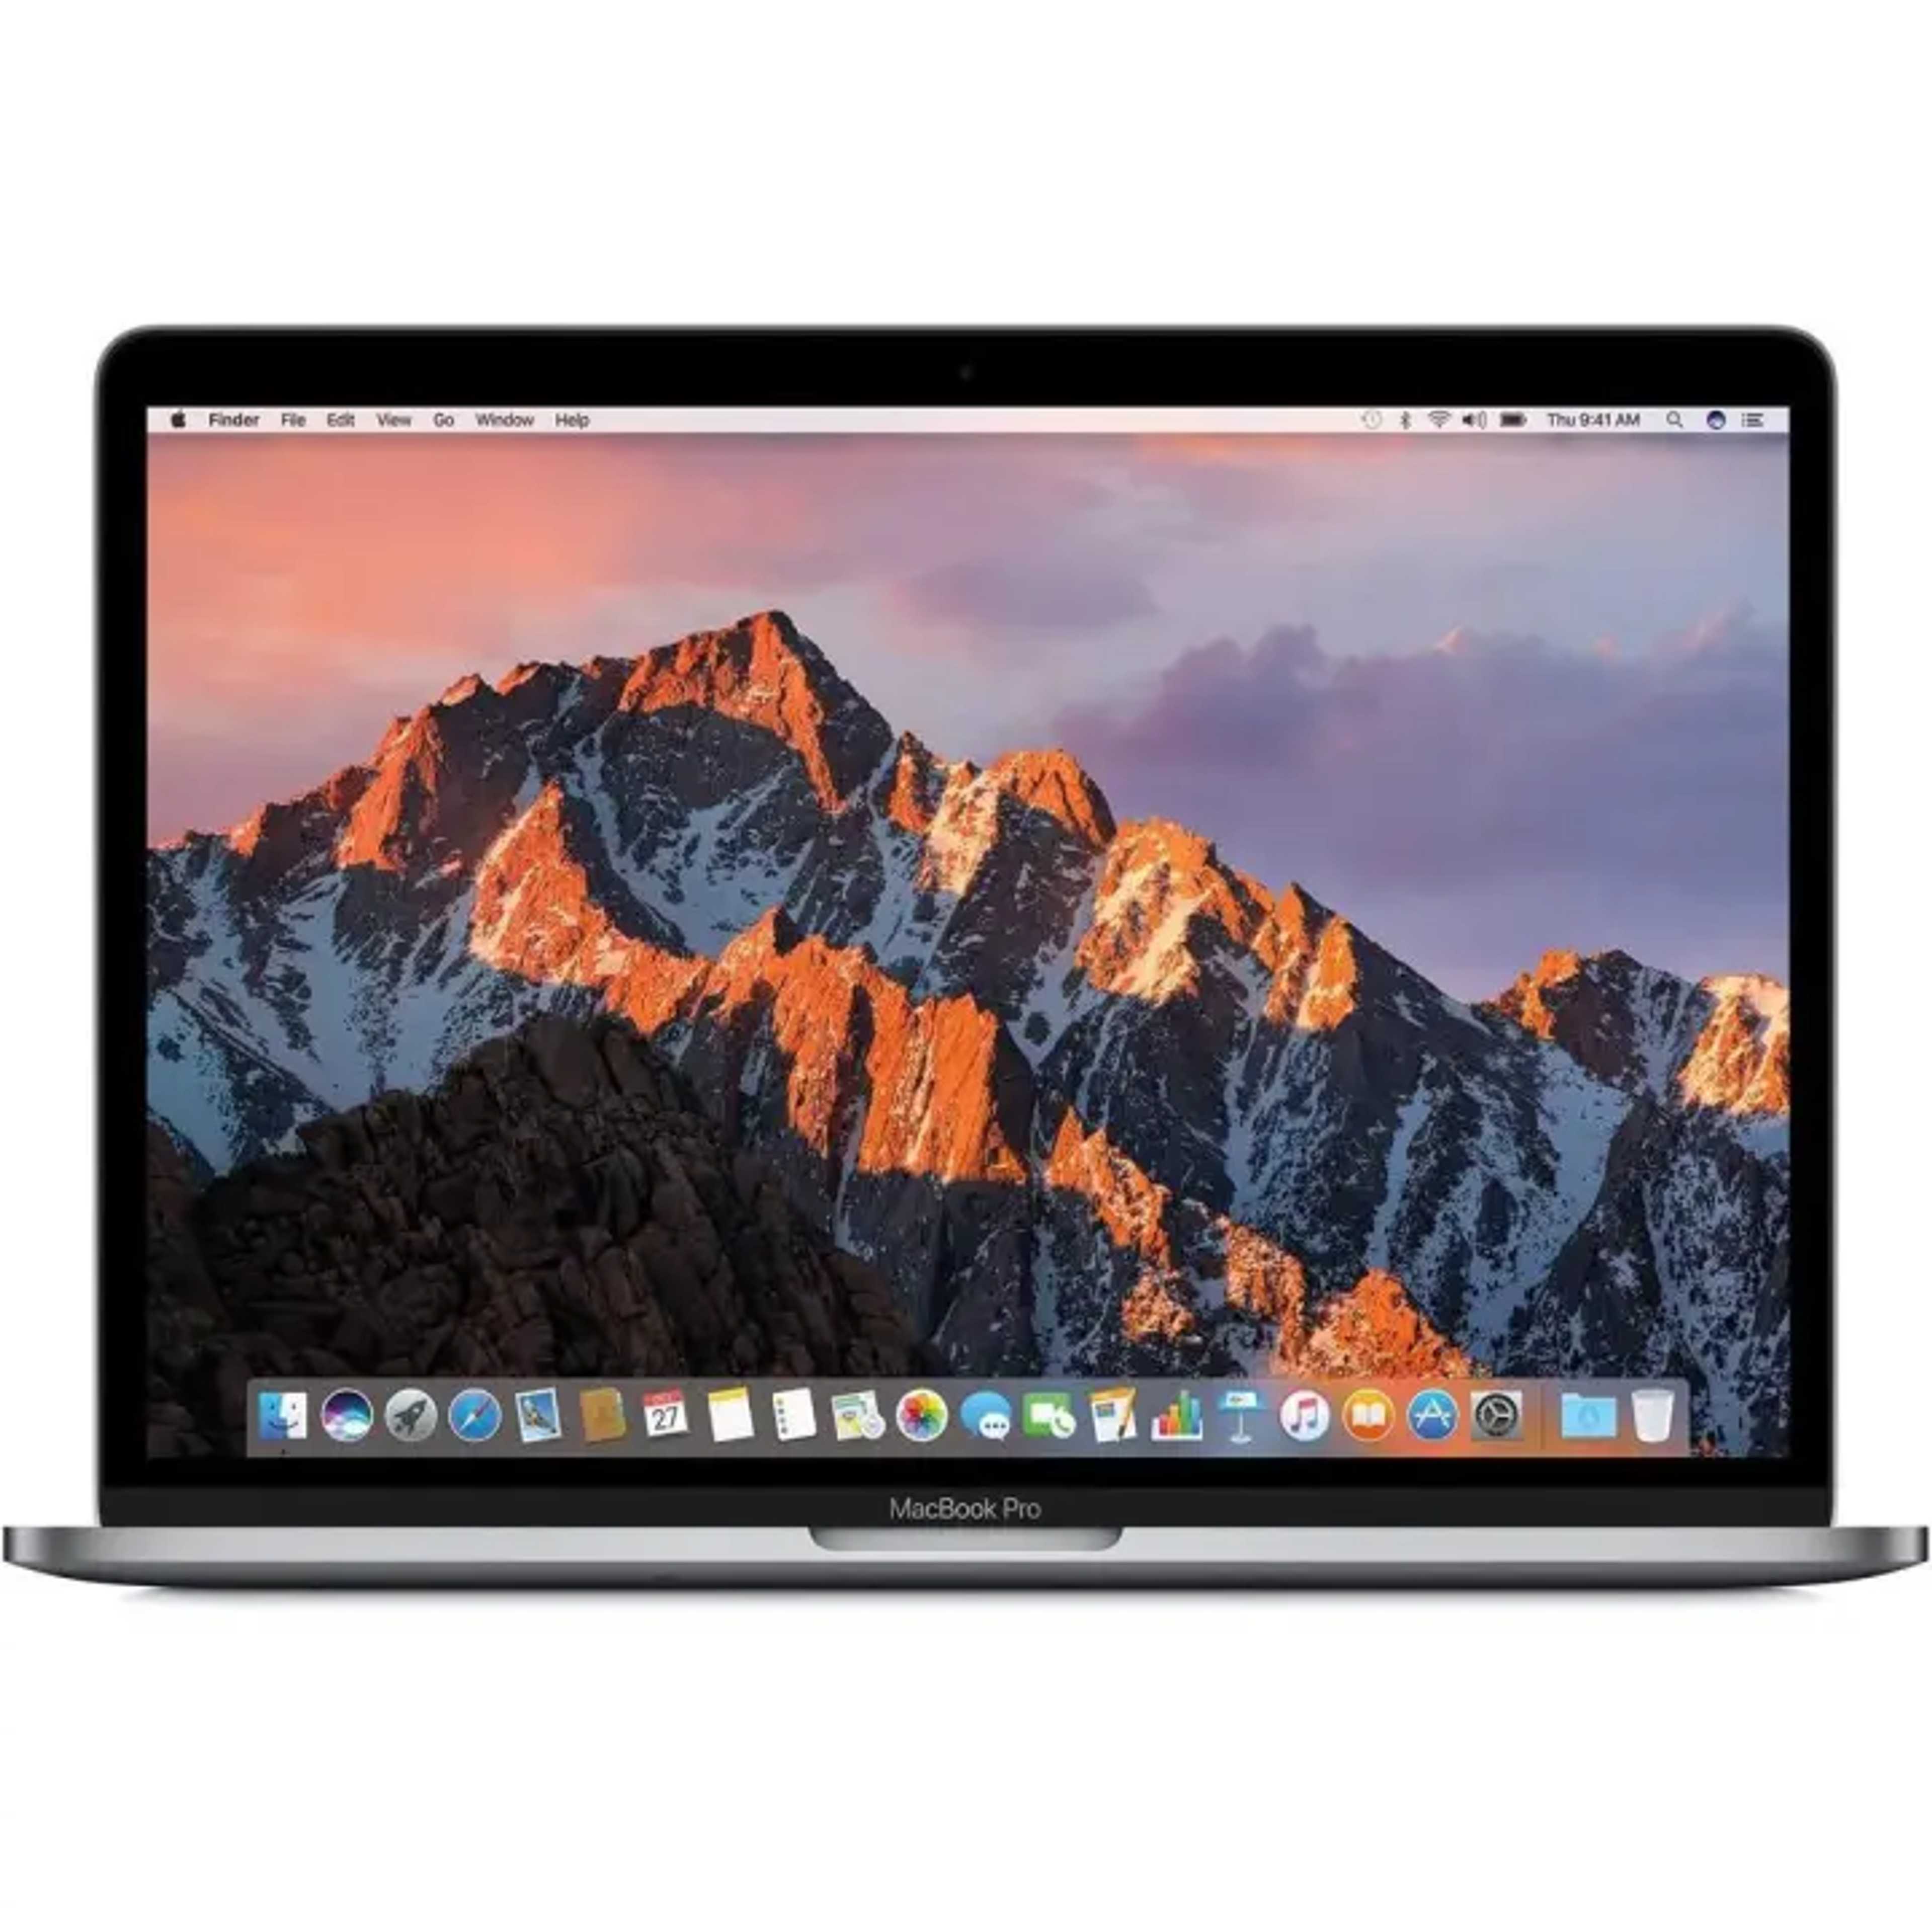 Apple MacBook Pro 2017 2.3 GHz Intel Core i5 (13 inch Retina Display, 8GB RAM, 128GB SSD) Space Gray